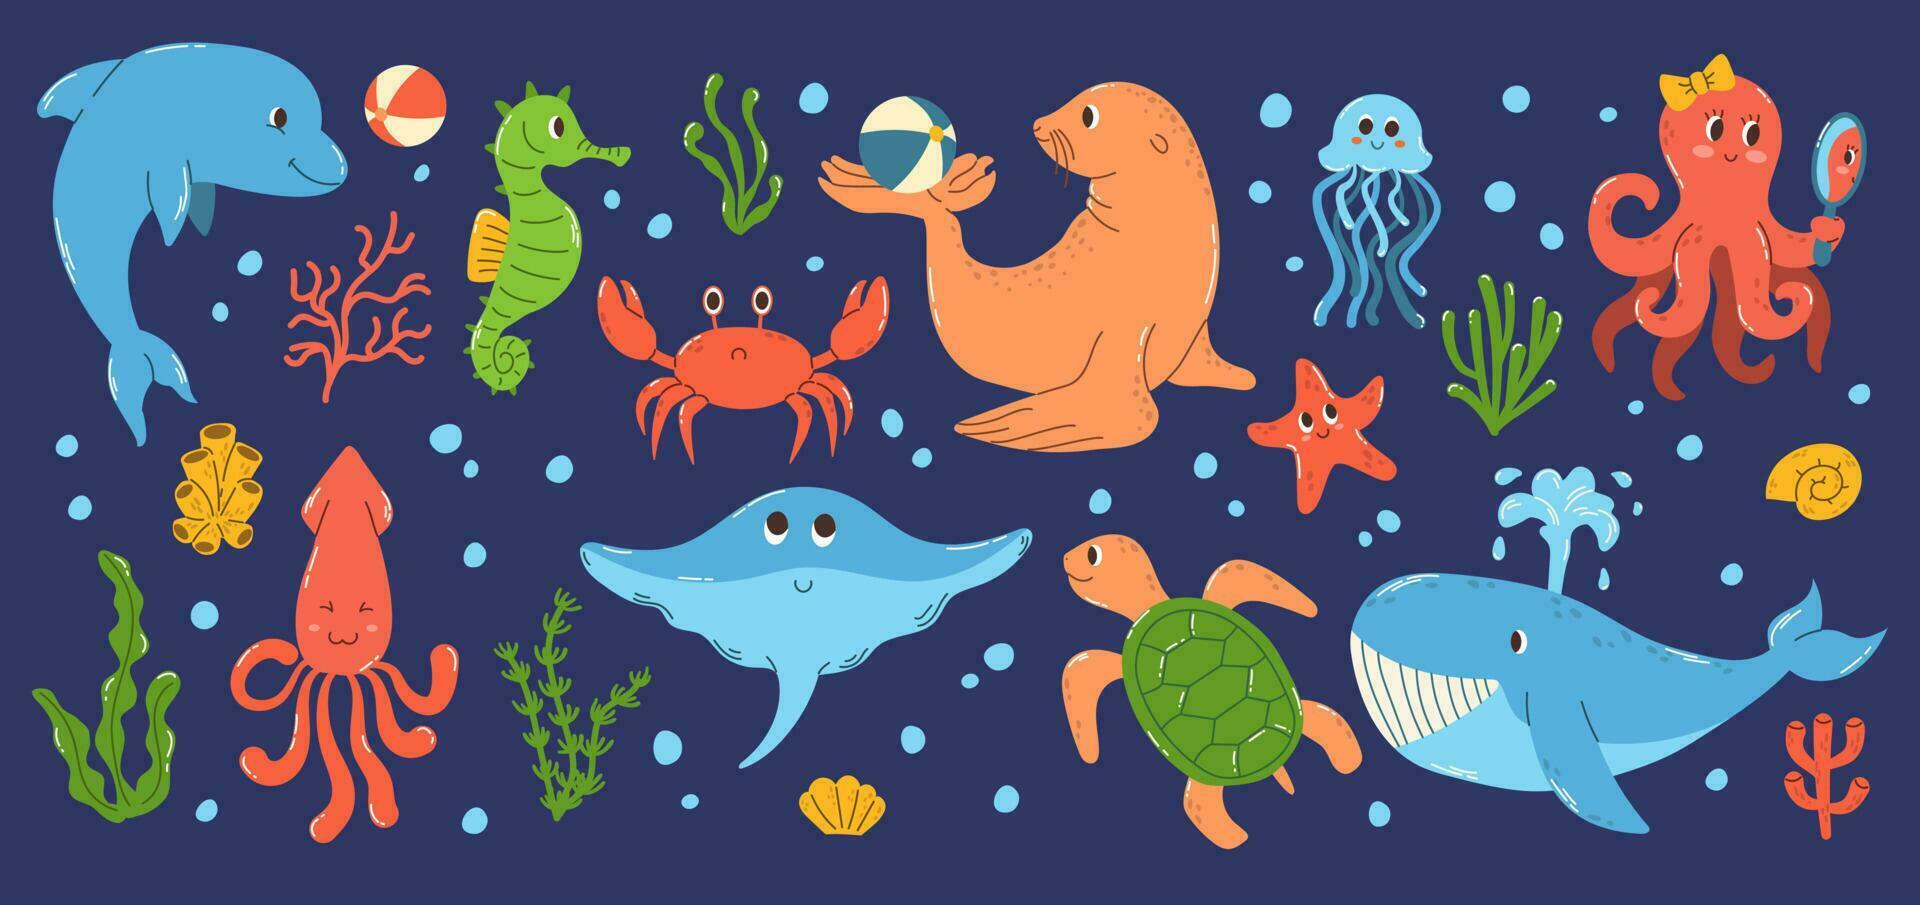 conjunto aislado vistoso mano dibujado marina animales y objetos submarino mundo en plano vector estilo en oscuro azul antecedentes. marina vida vector garabatos